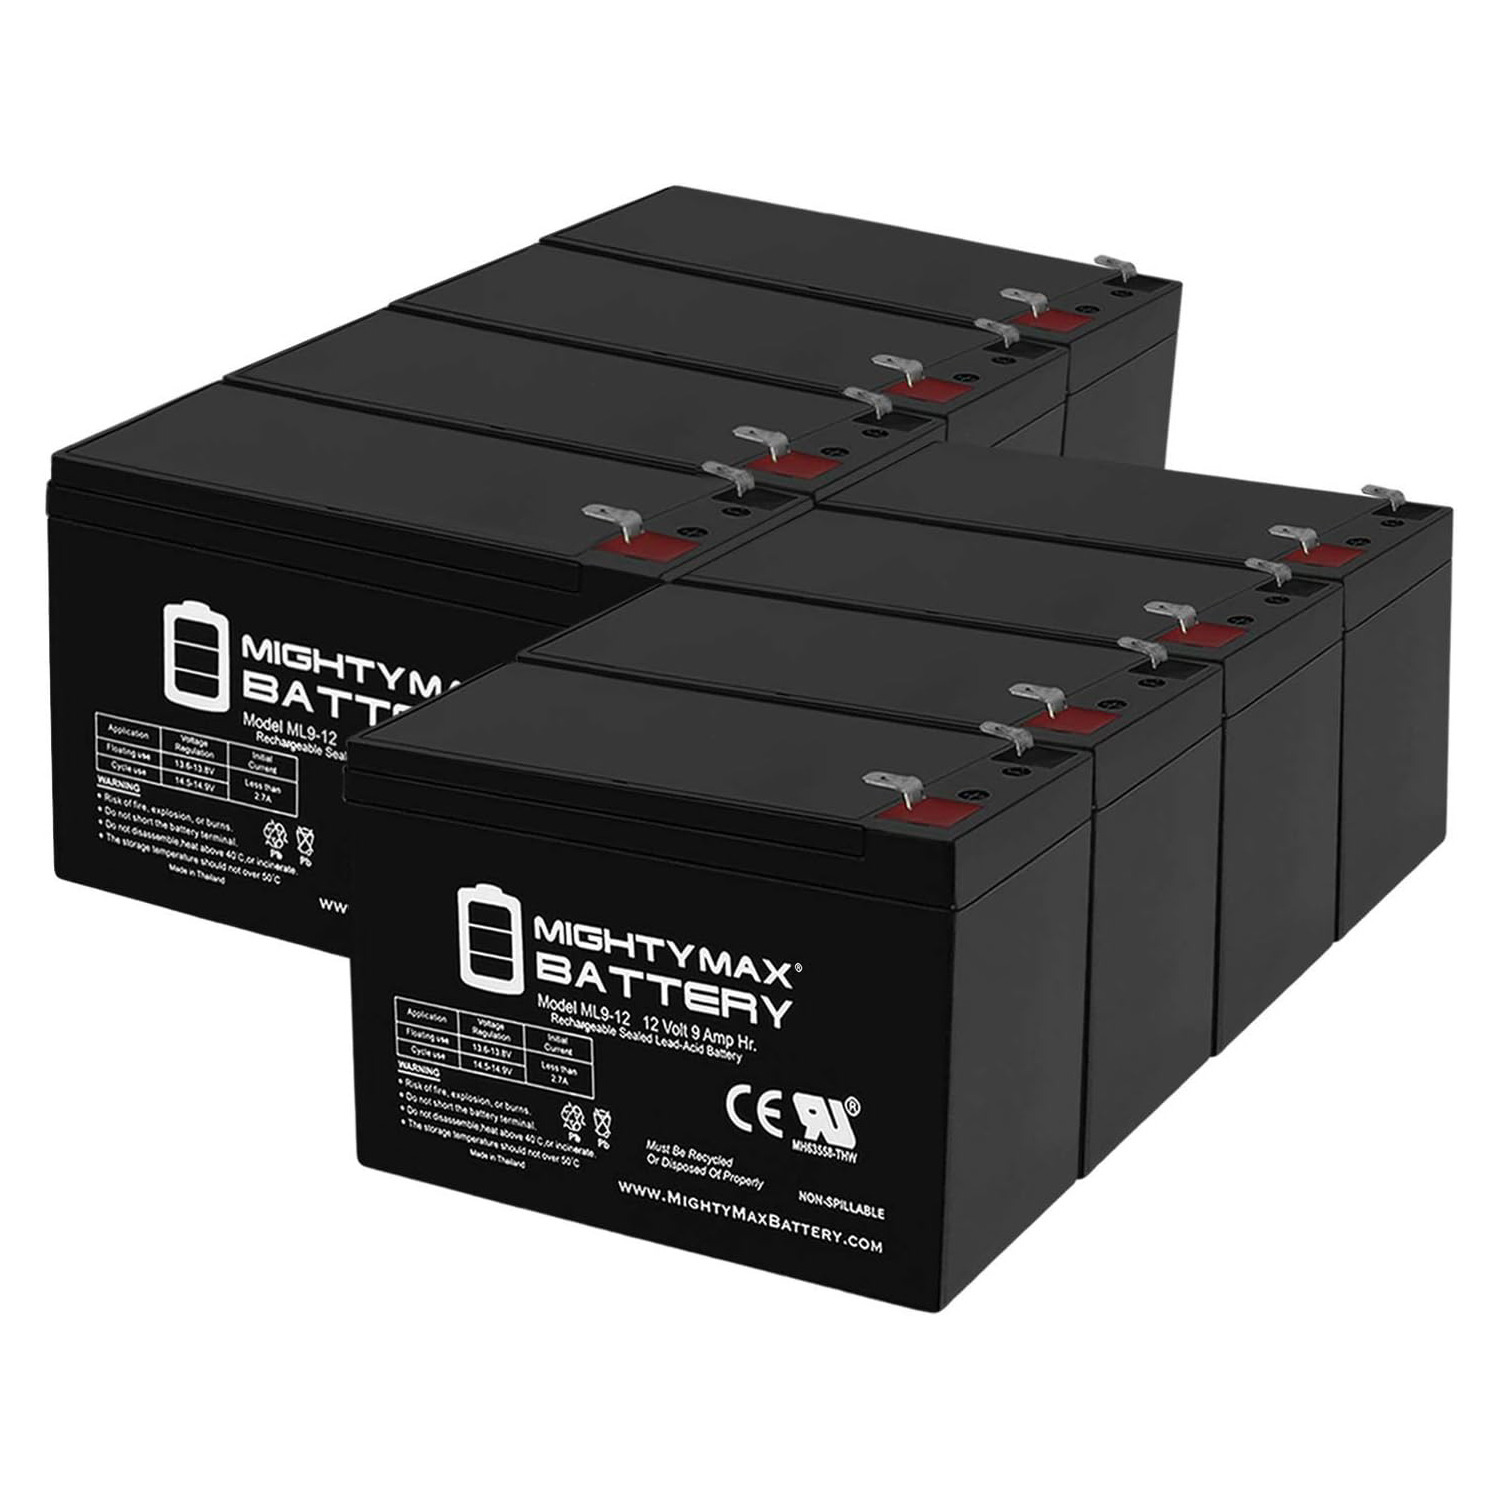 Altronix SMP7PMP16 12V, 9Ah Lead Acid Battery - 8 Pack